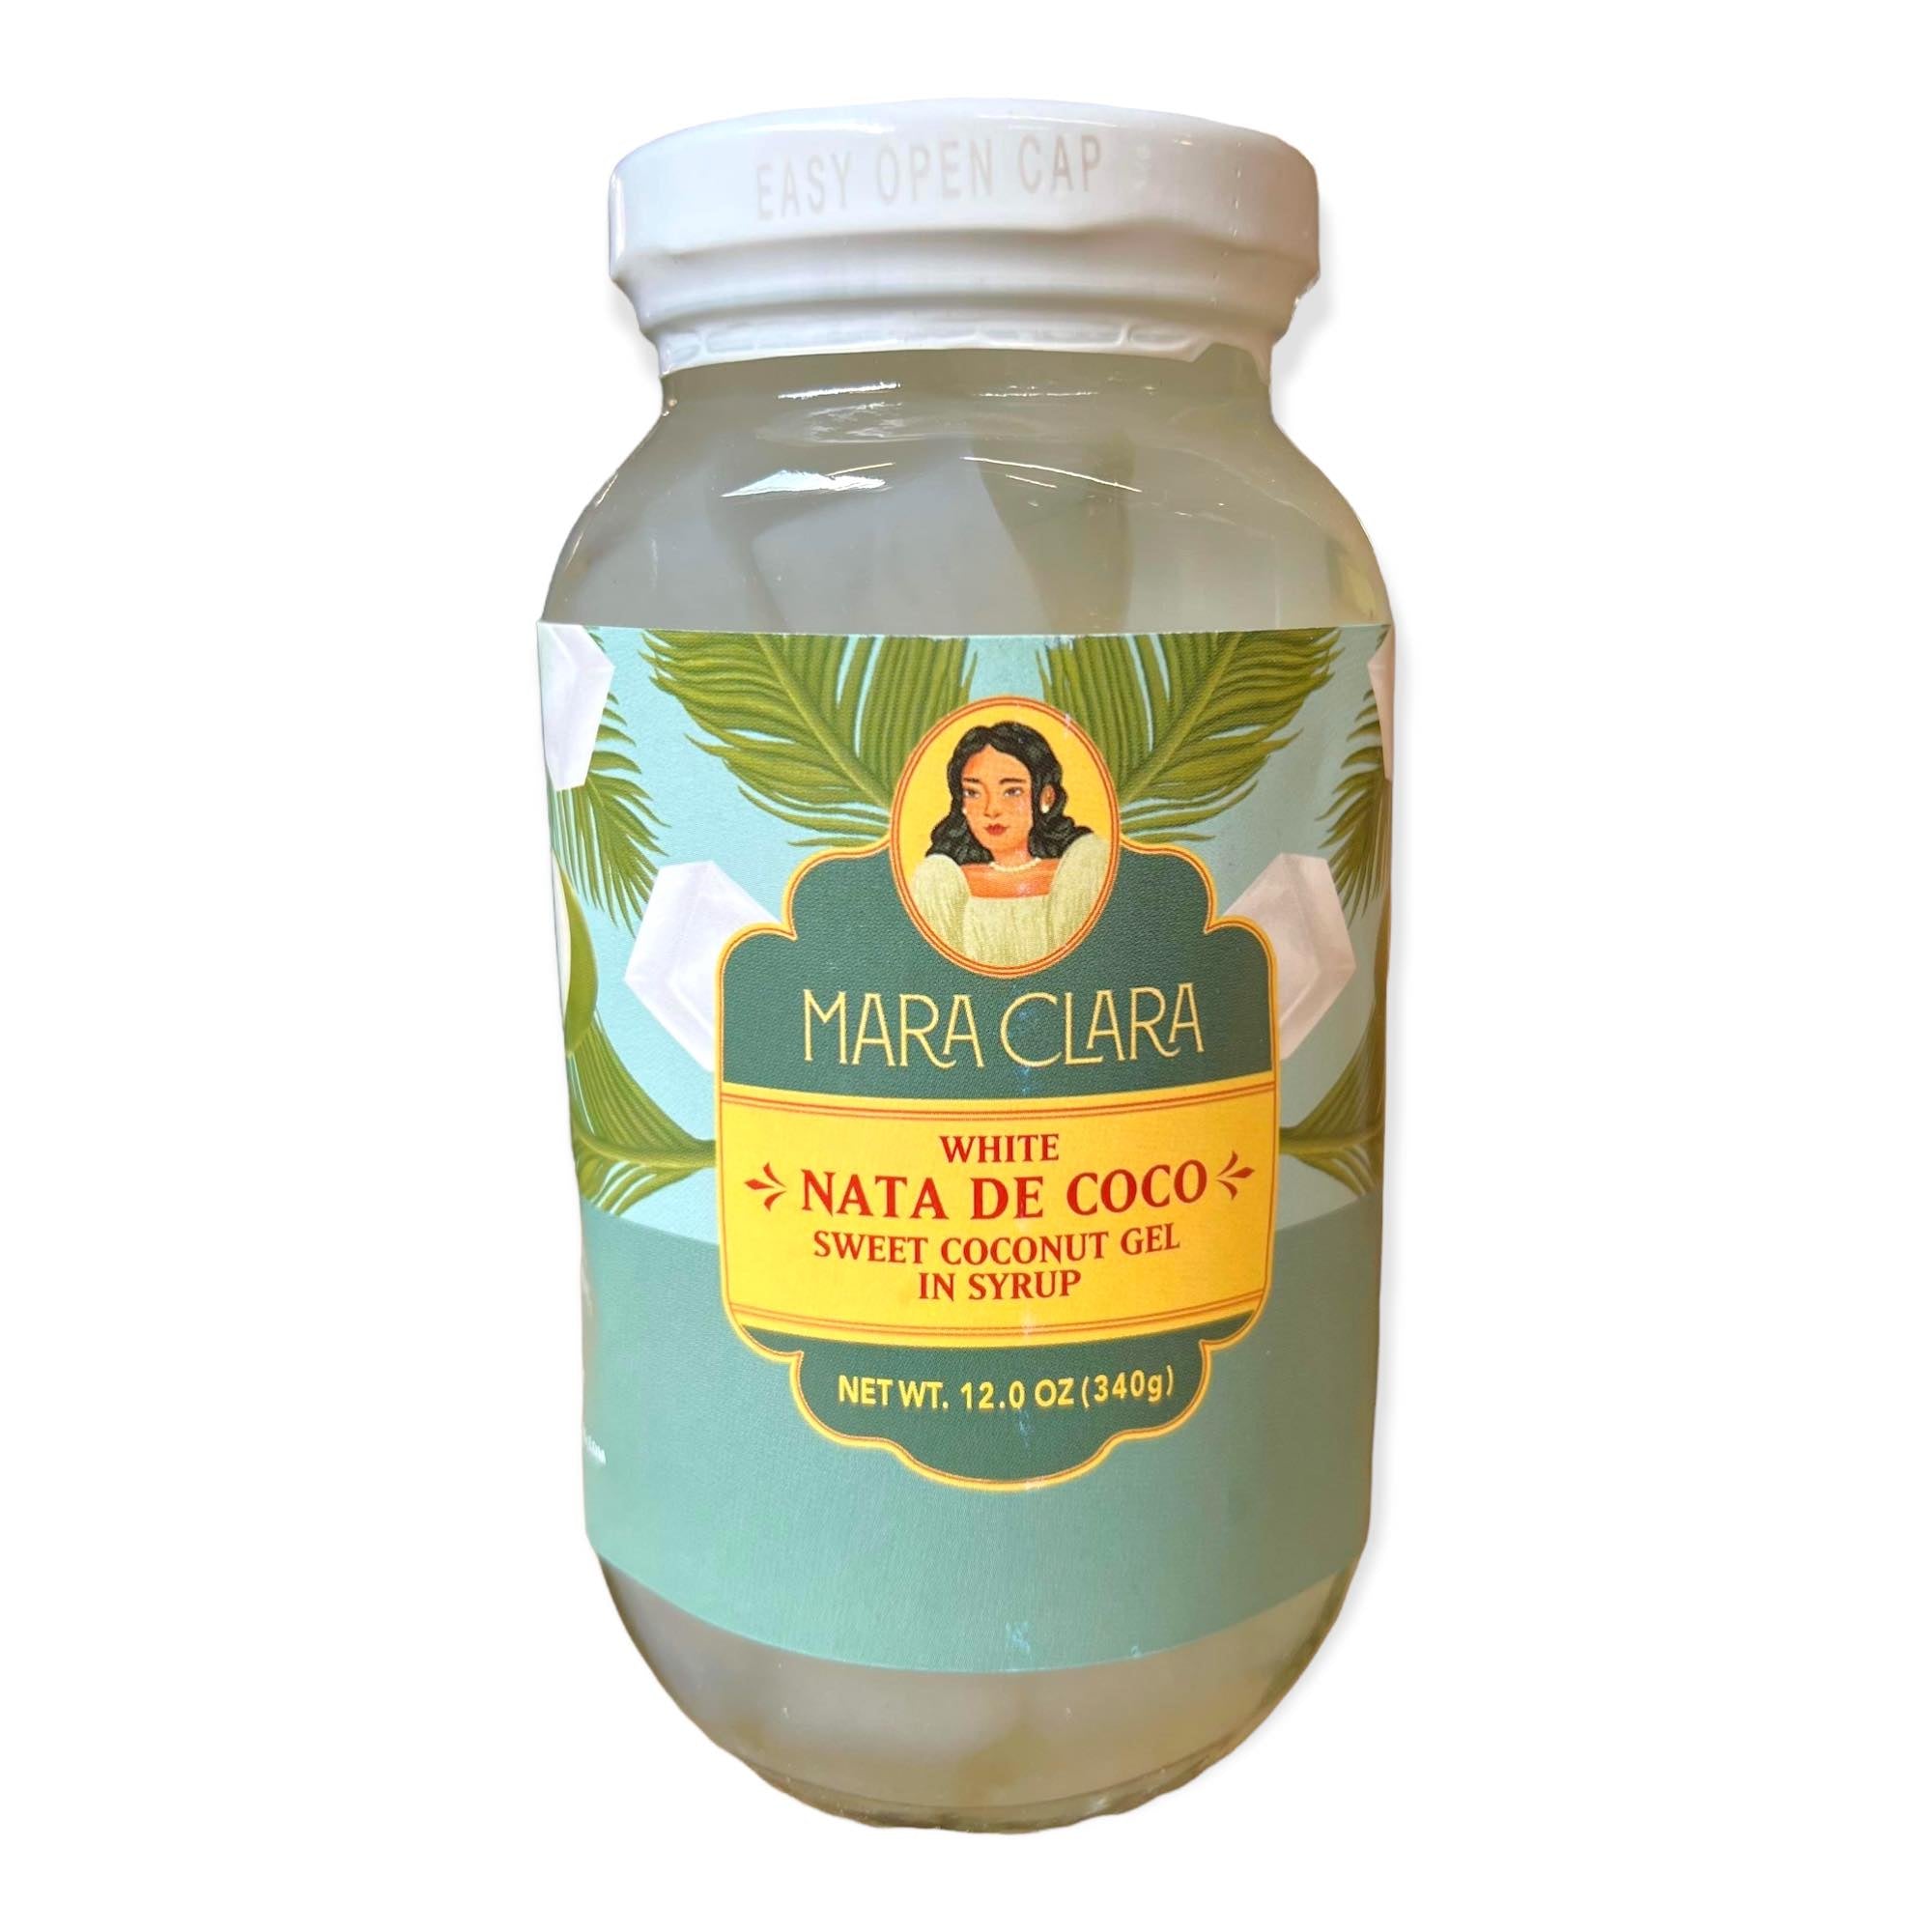 Mara Clara - White Nata De Coco - Sweet Coconut Gel in Syrup - 12 OZ